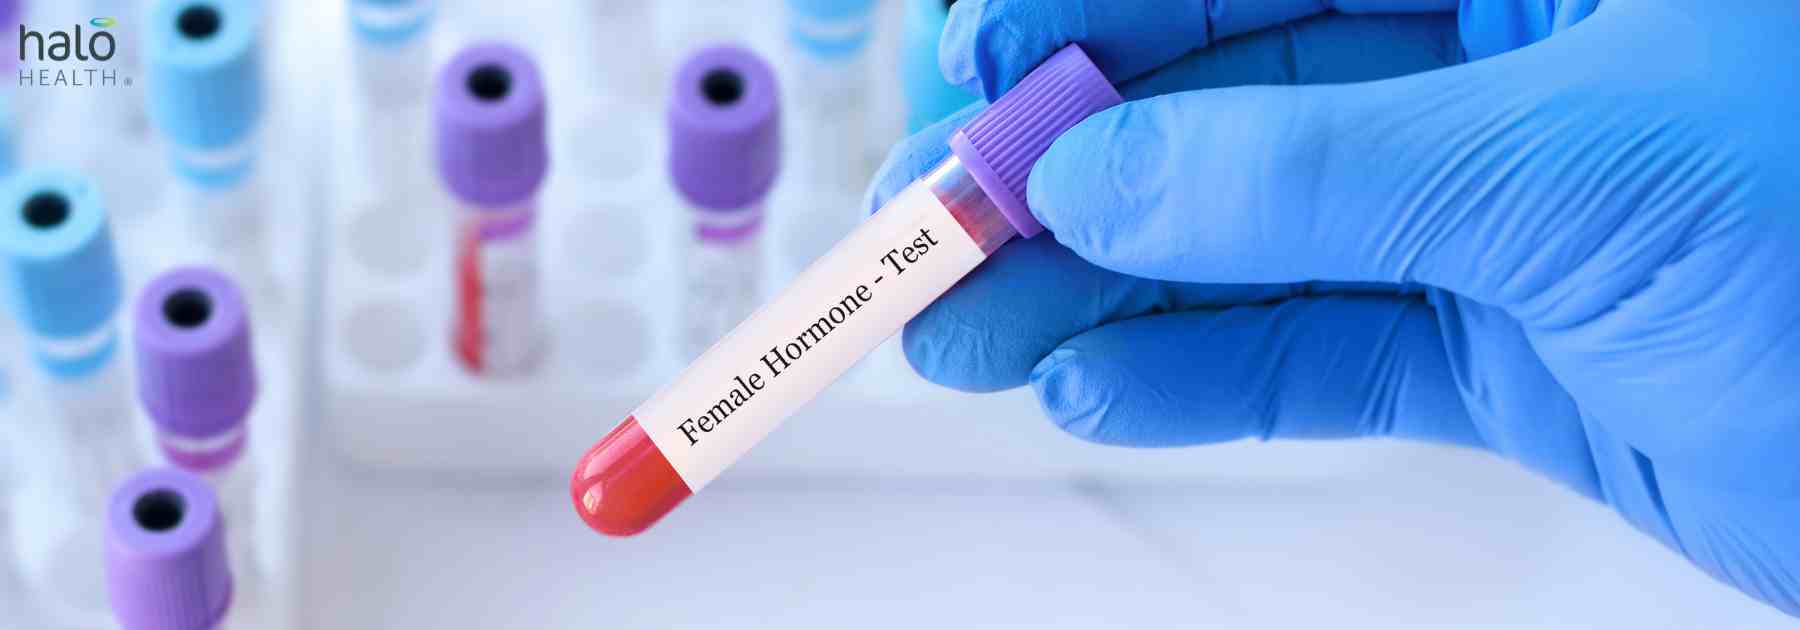 female hormone blood test